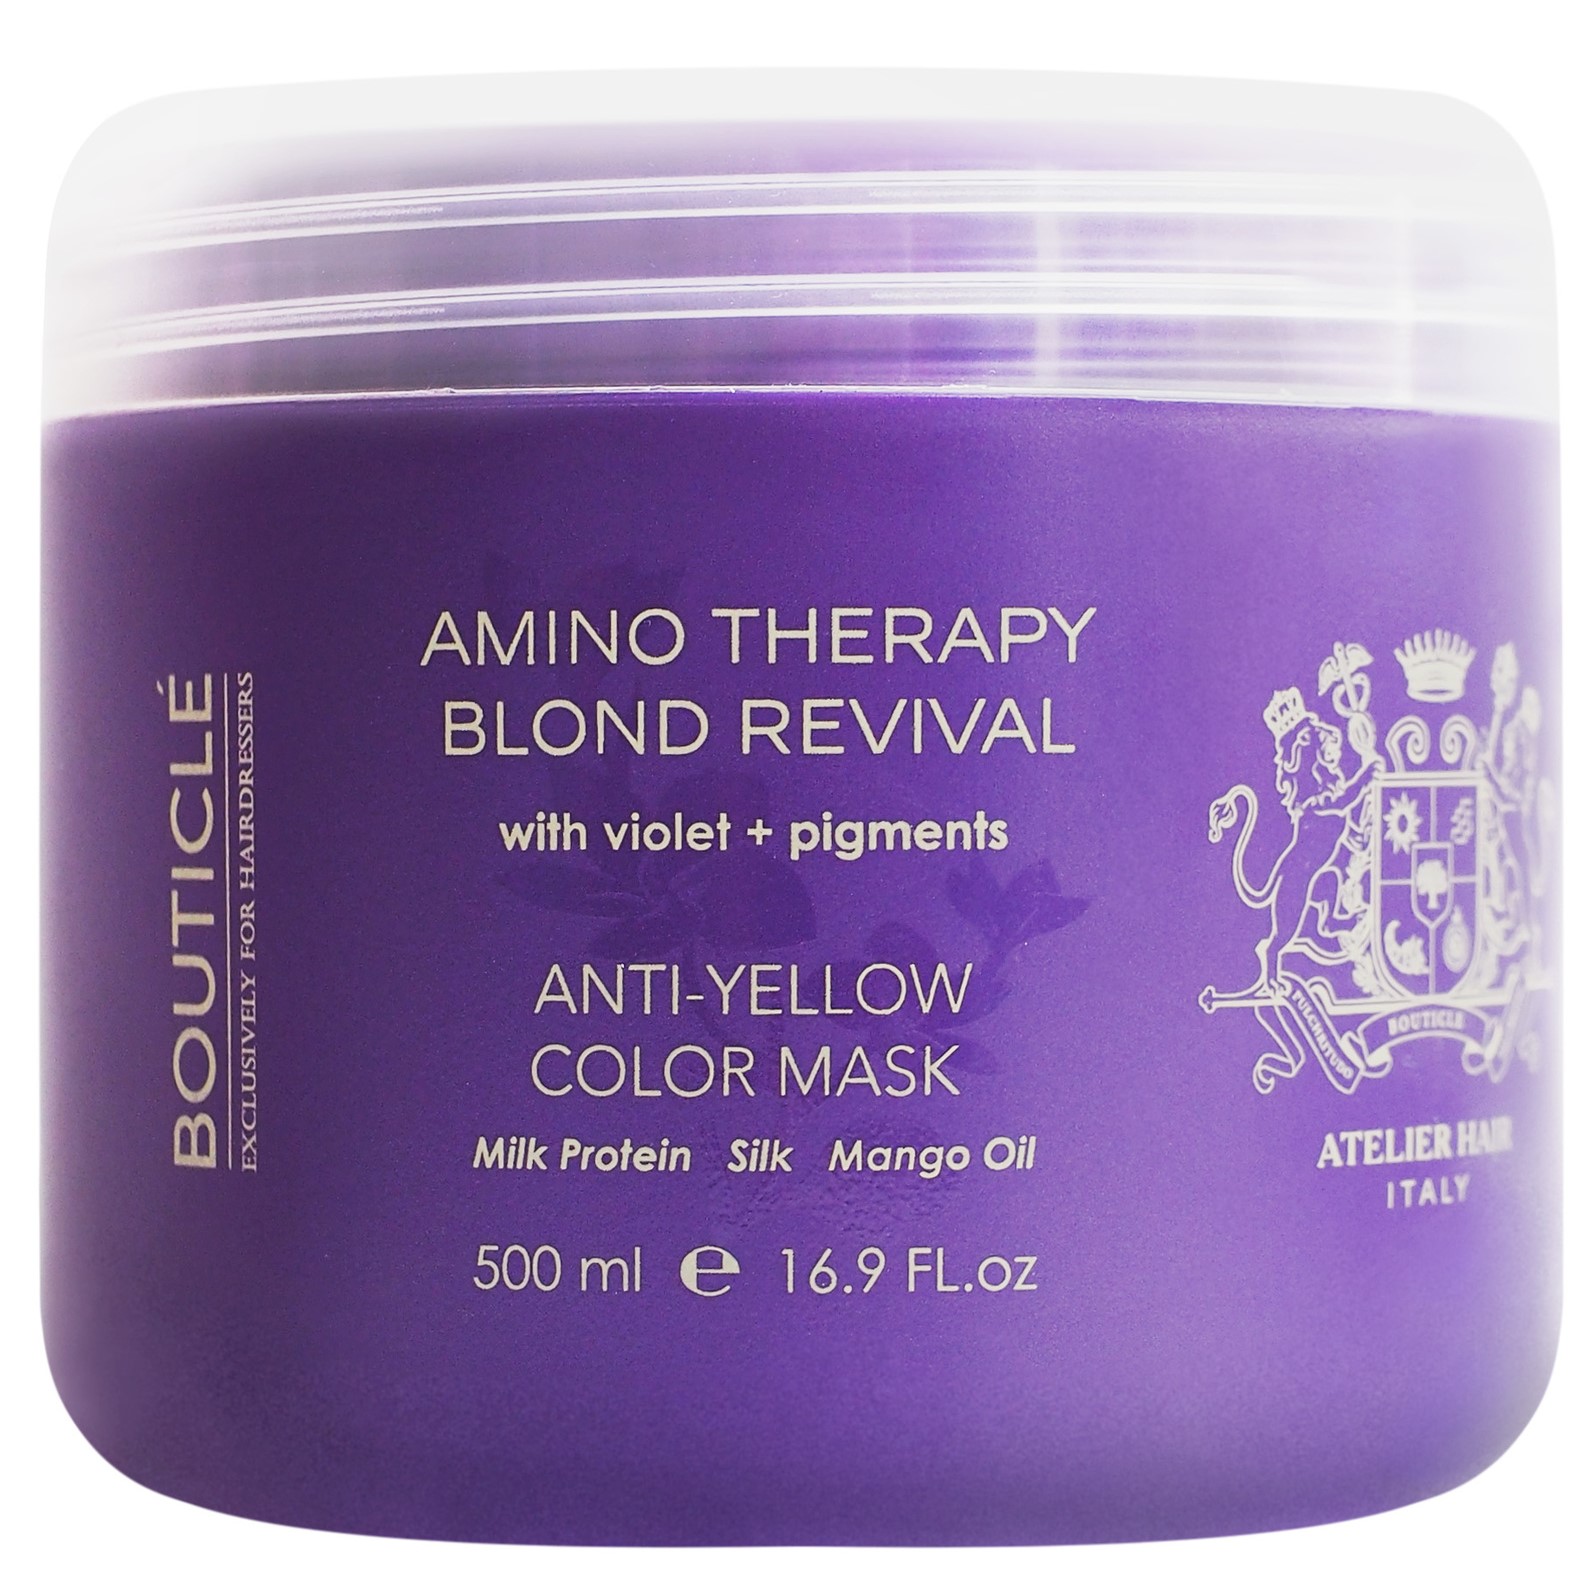 BOUTICLE, Восстанавливающая маска с анти-желтым эффектом Amino Therapy Blond Revival, 500 мл.